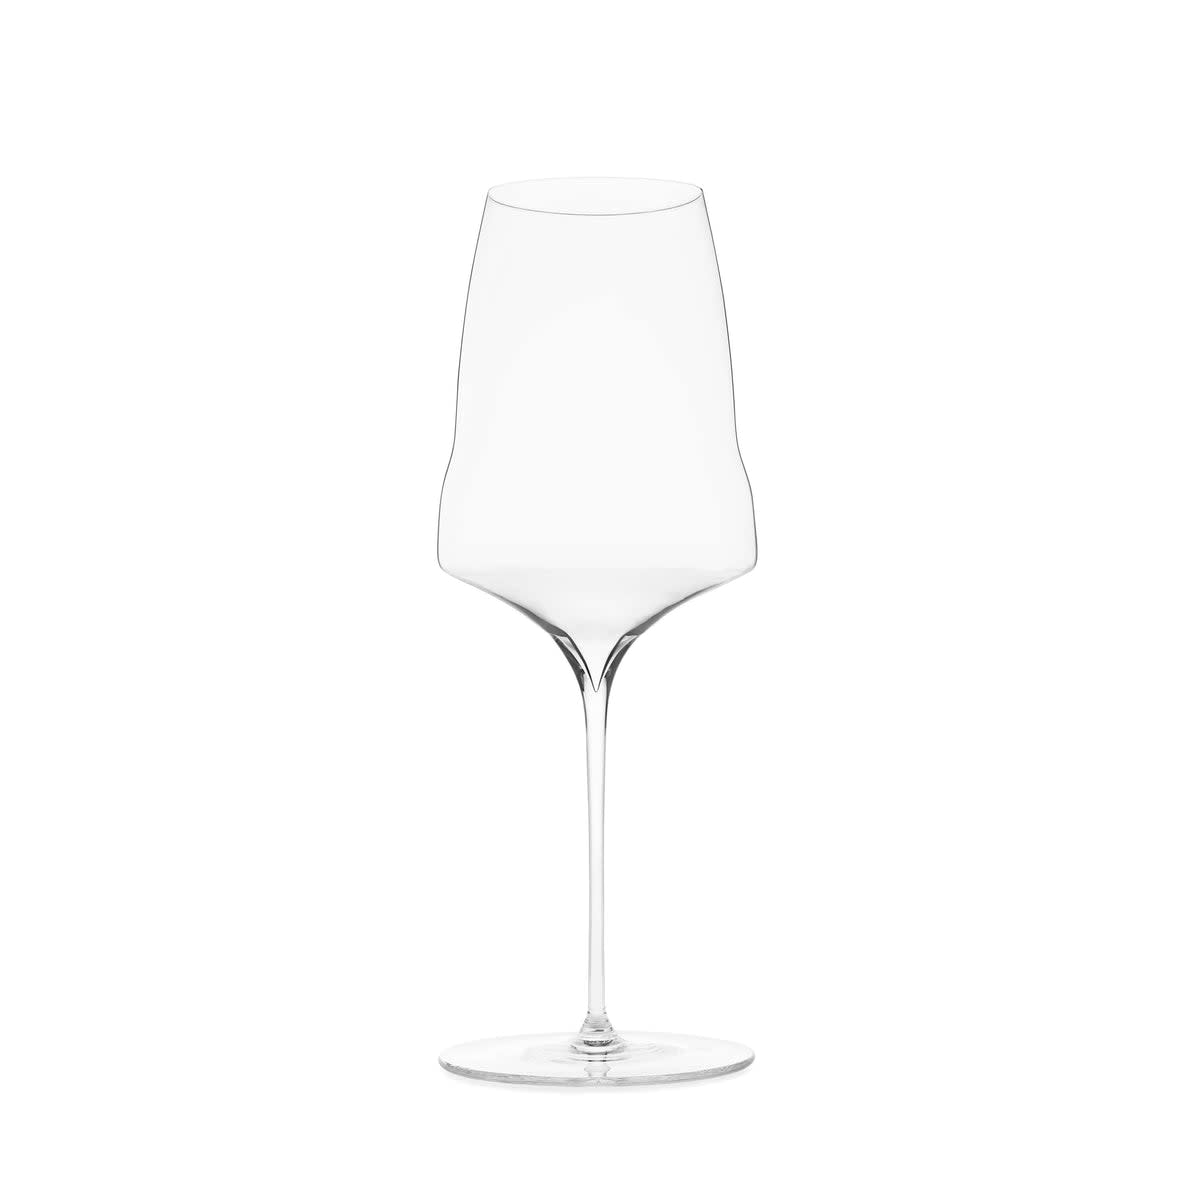 The Best Universal Wineglasses 2023